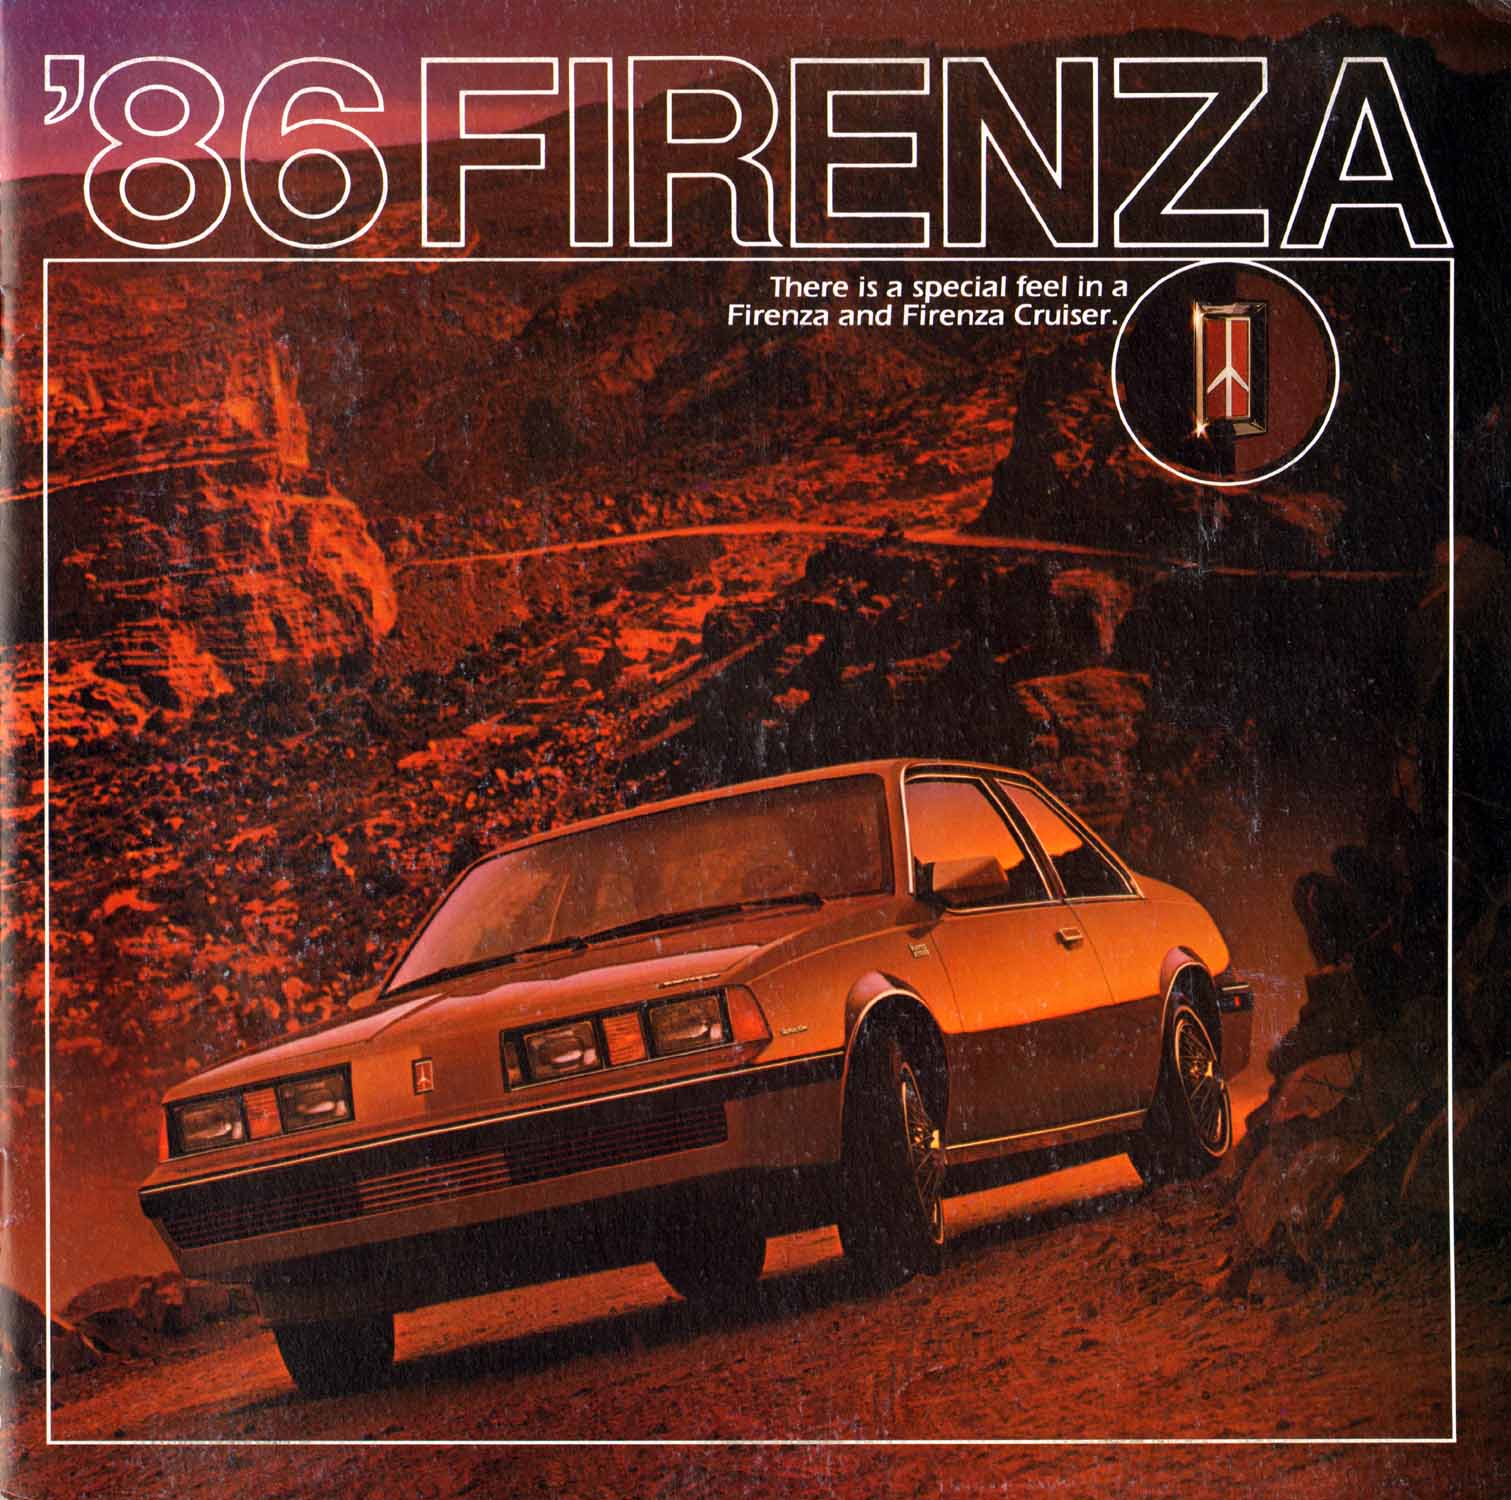 n_1986 Oldsmobile Firenza-01.jpg